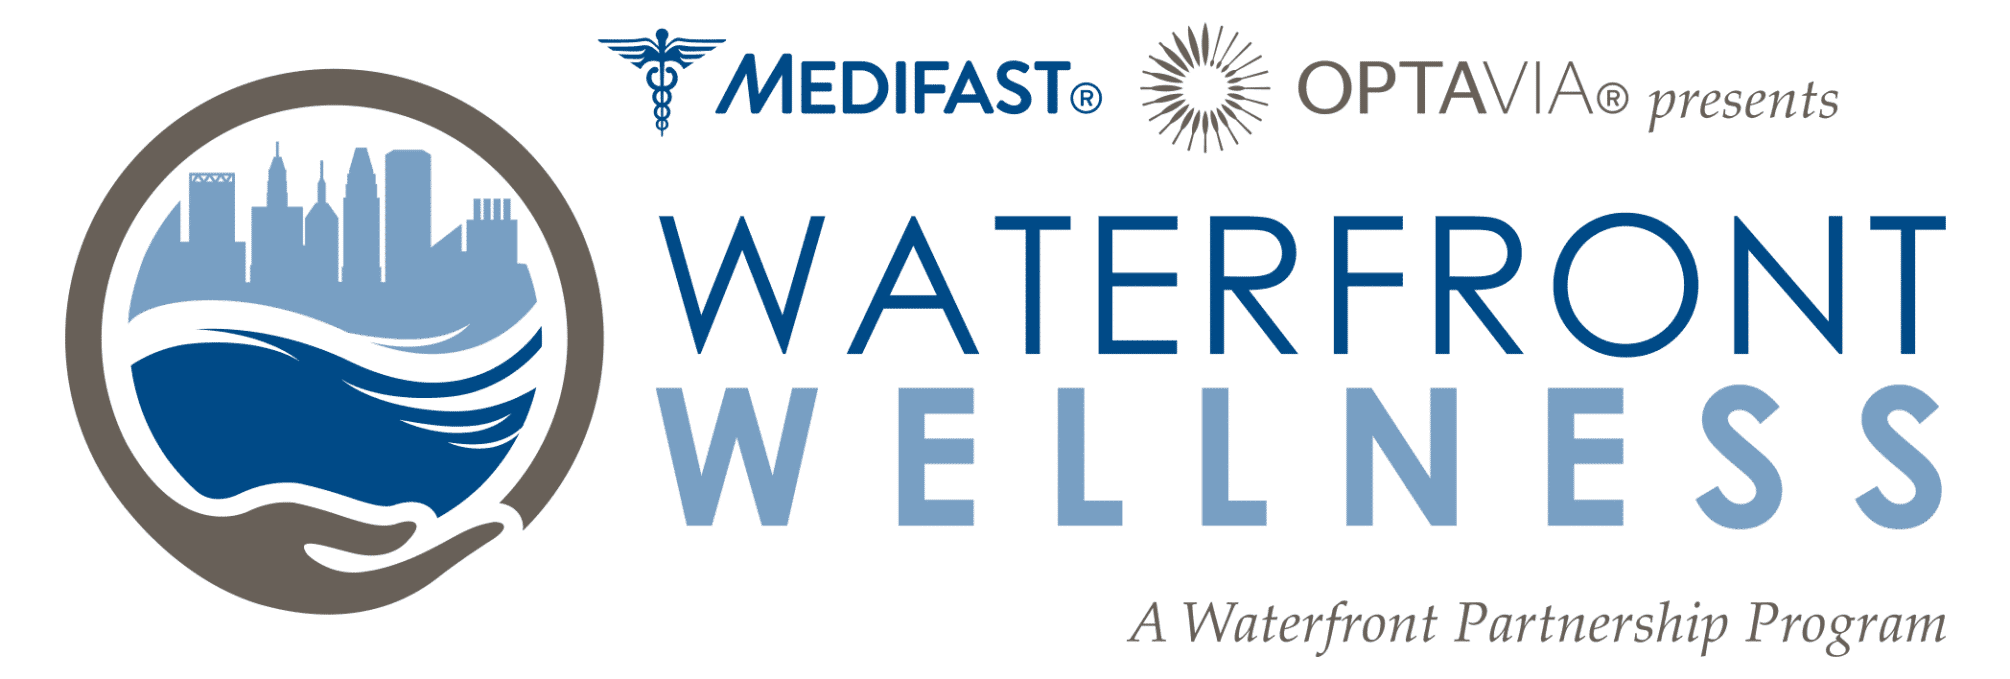 MedifastOPTAVIA_WaterfrontWellness_Logo